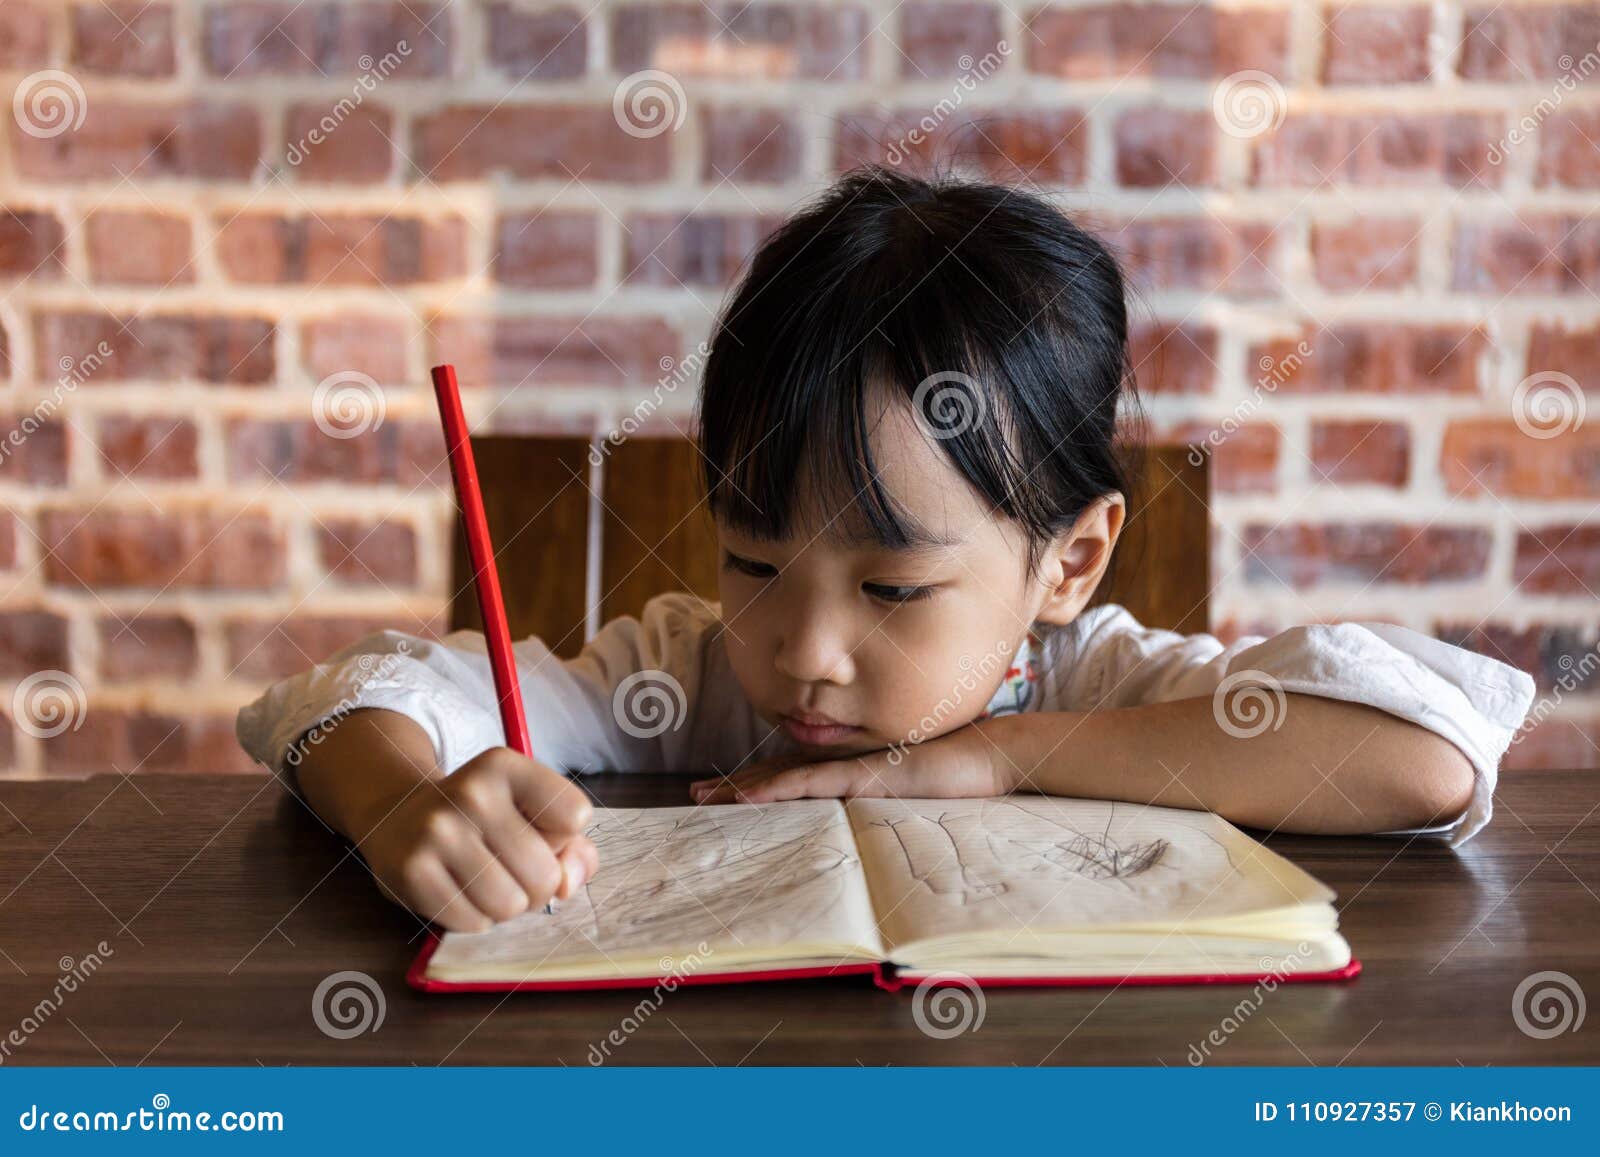 chinese restaurant kid doing homework